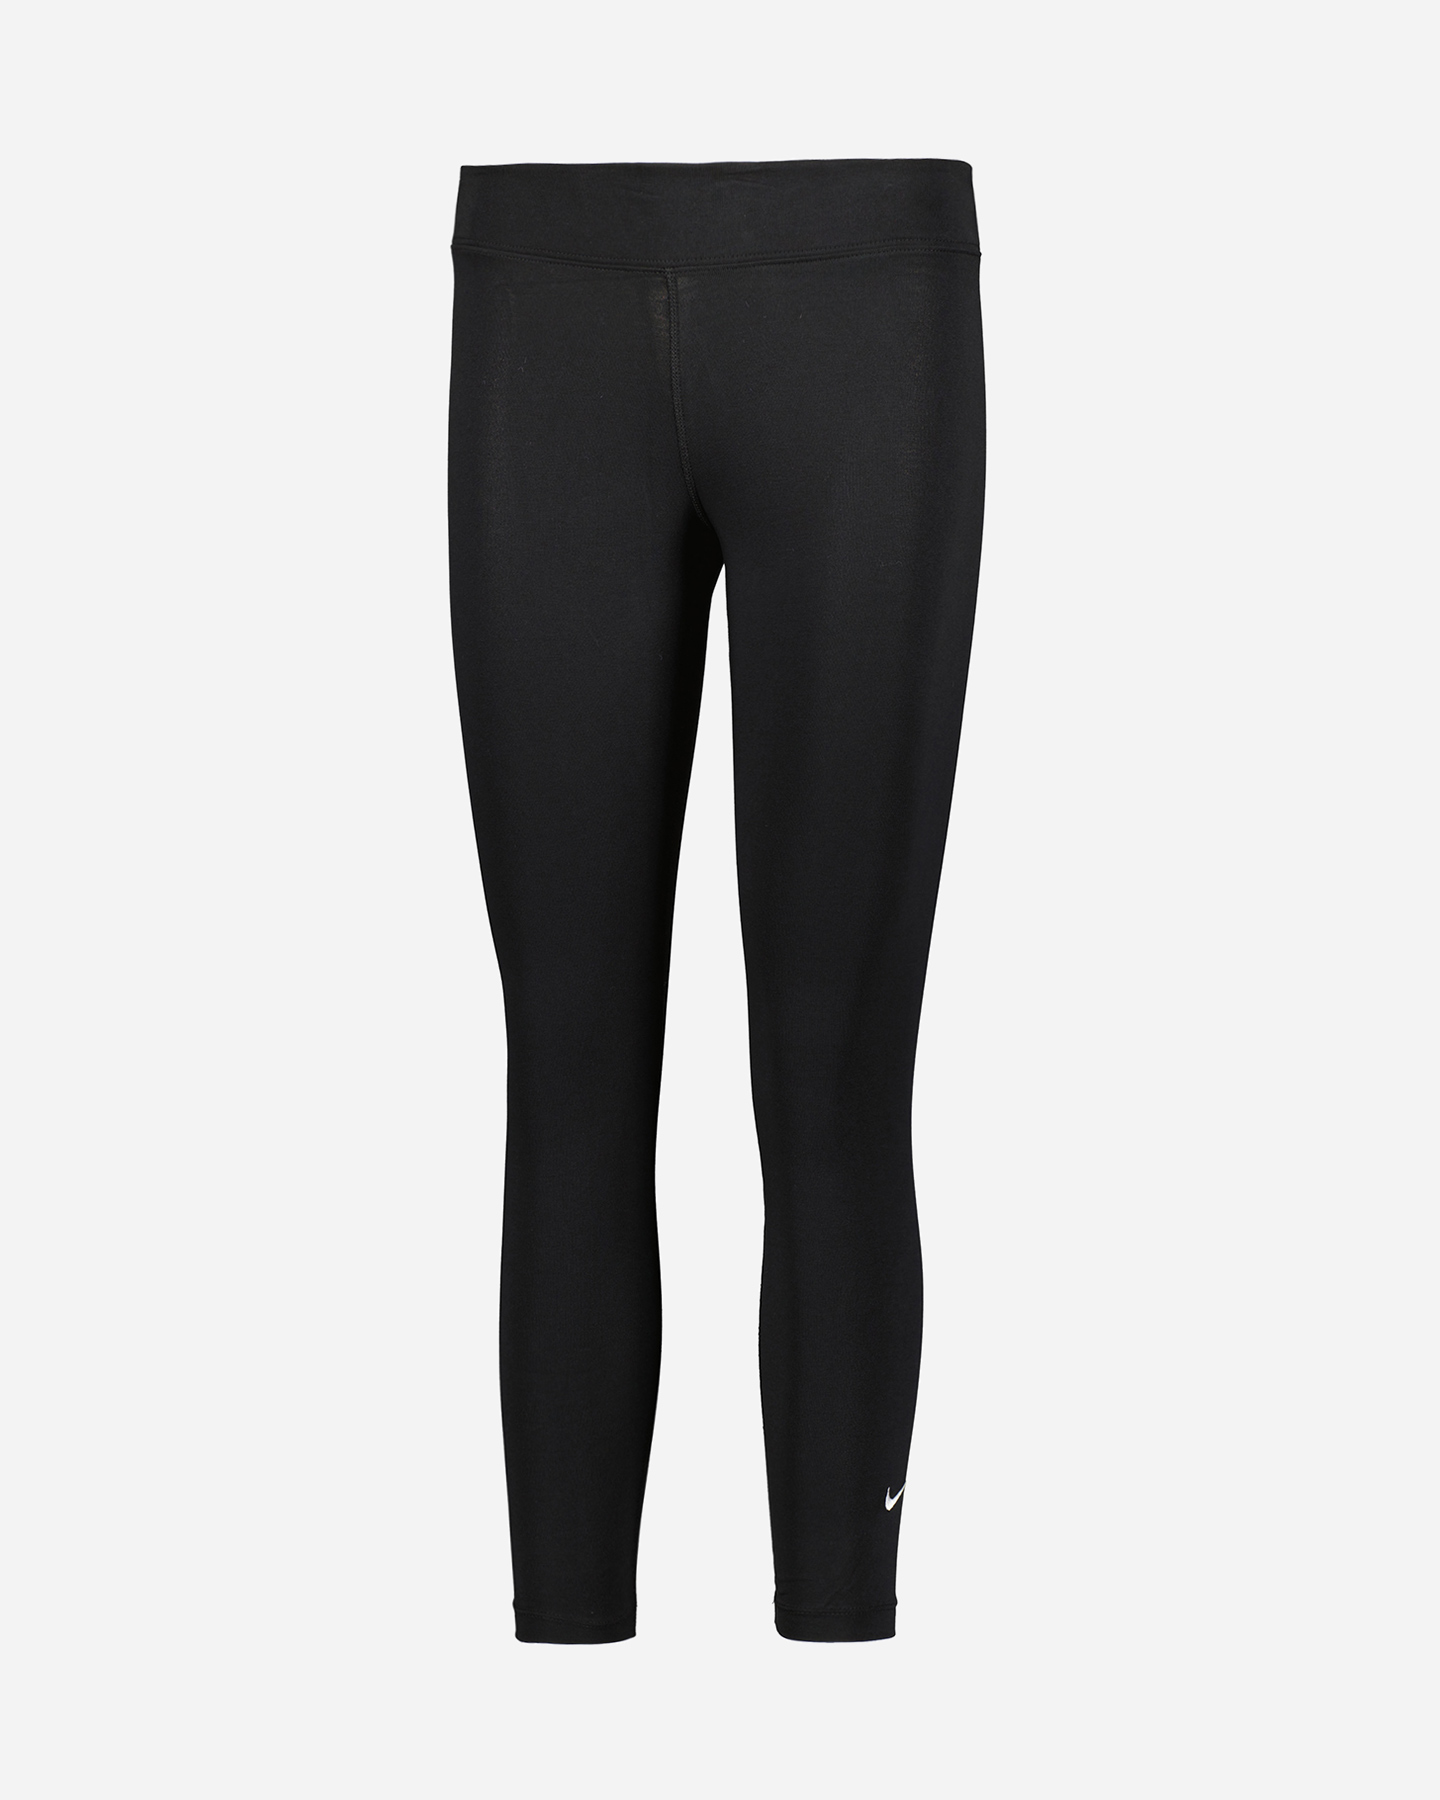 Image of Nike - Essential W - Leggings - Donna